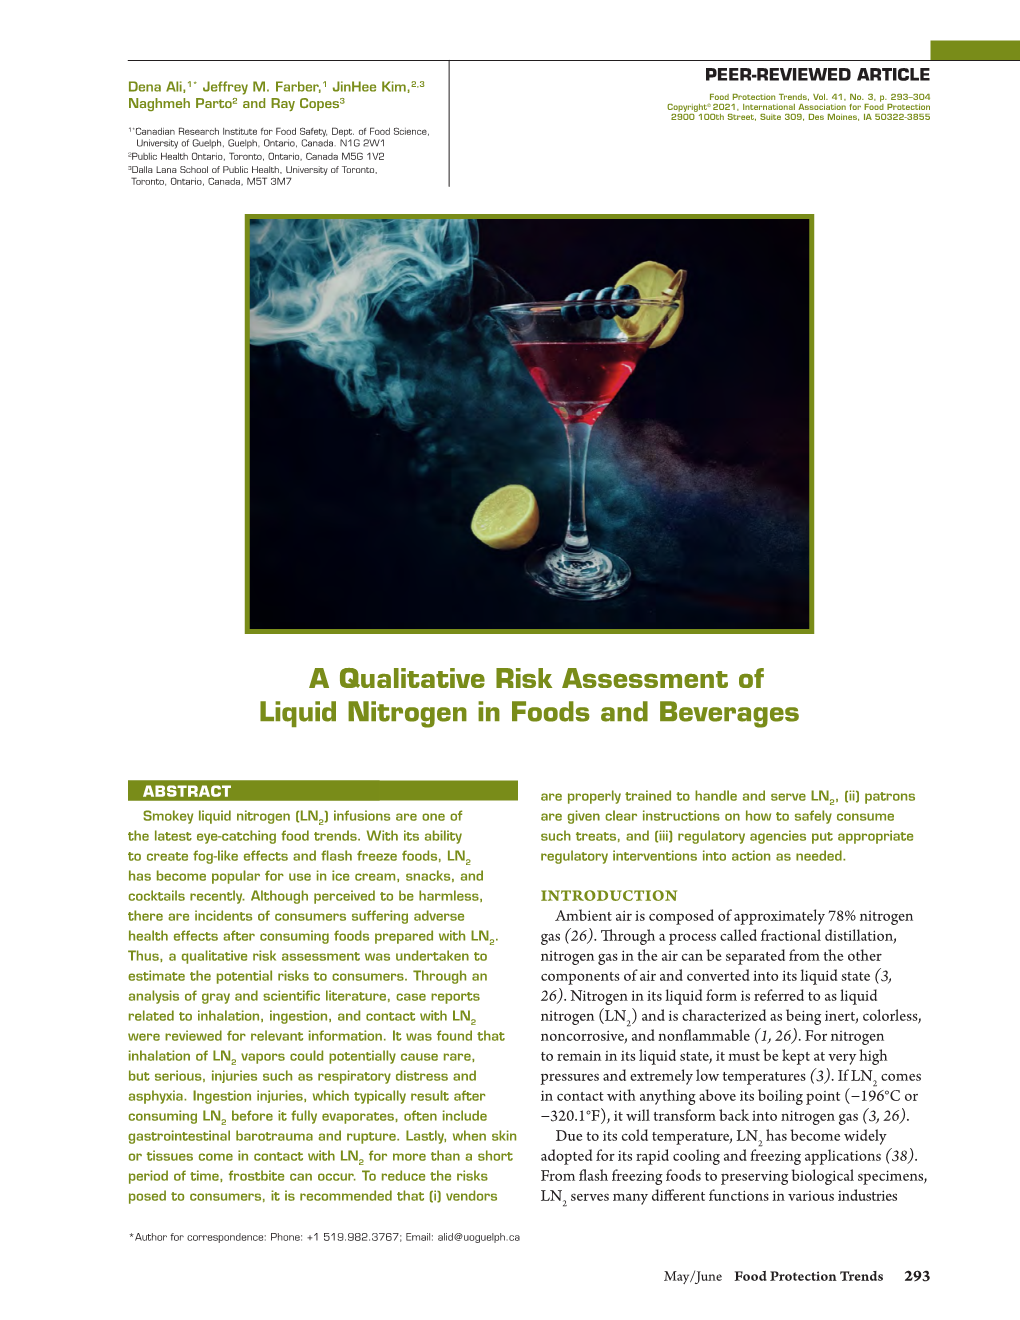 A Qualitative Risk Assessment of Liquid Nitrogen in Foods and Beverages